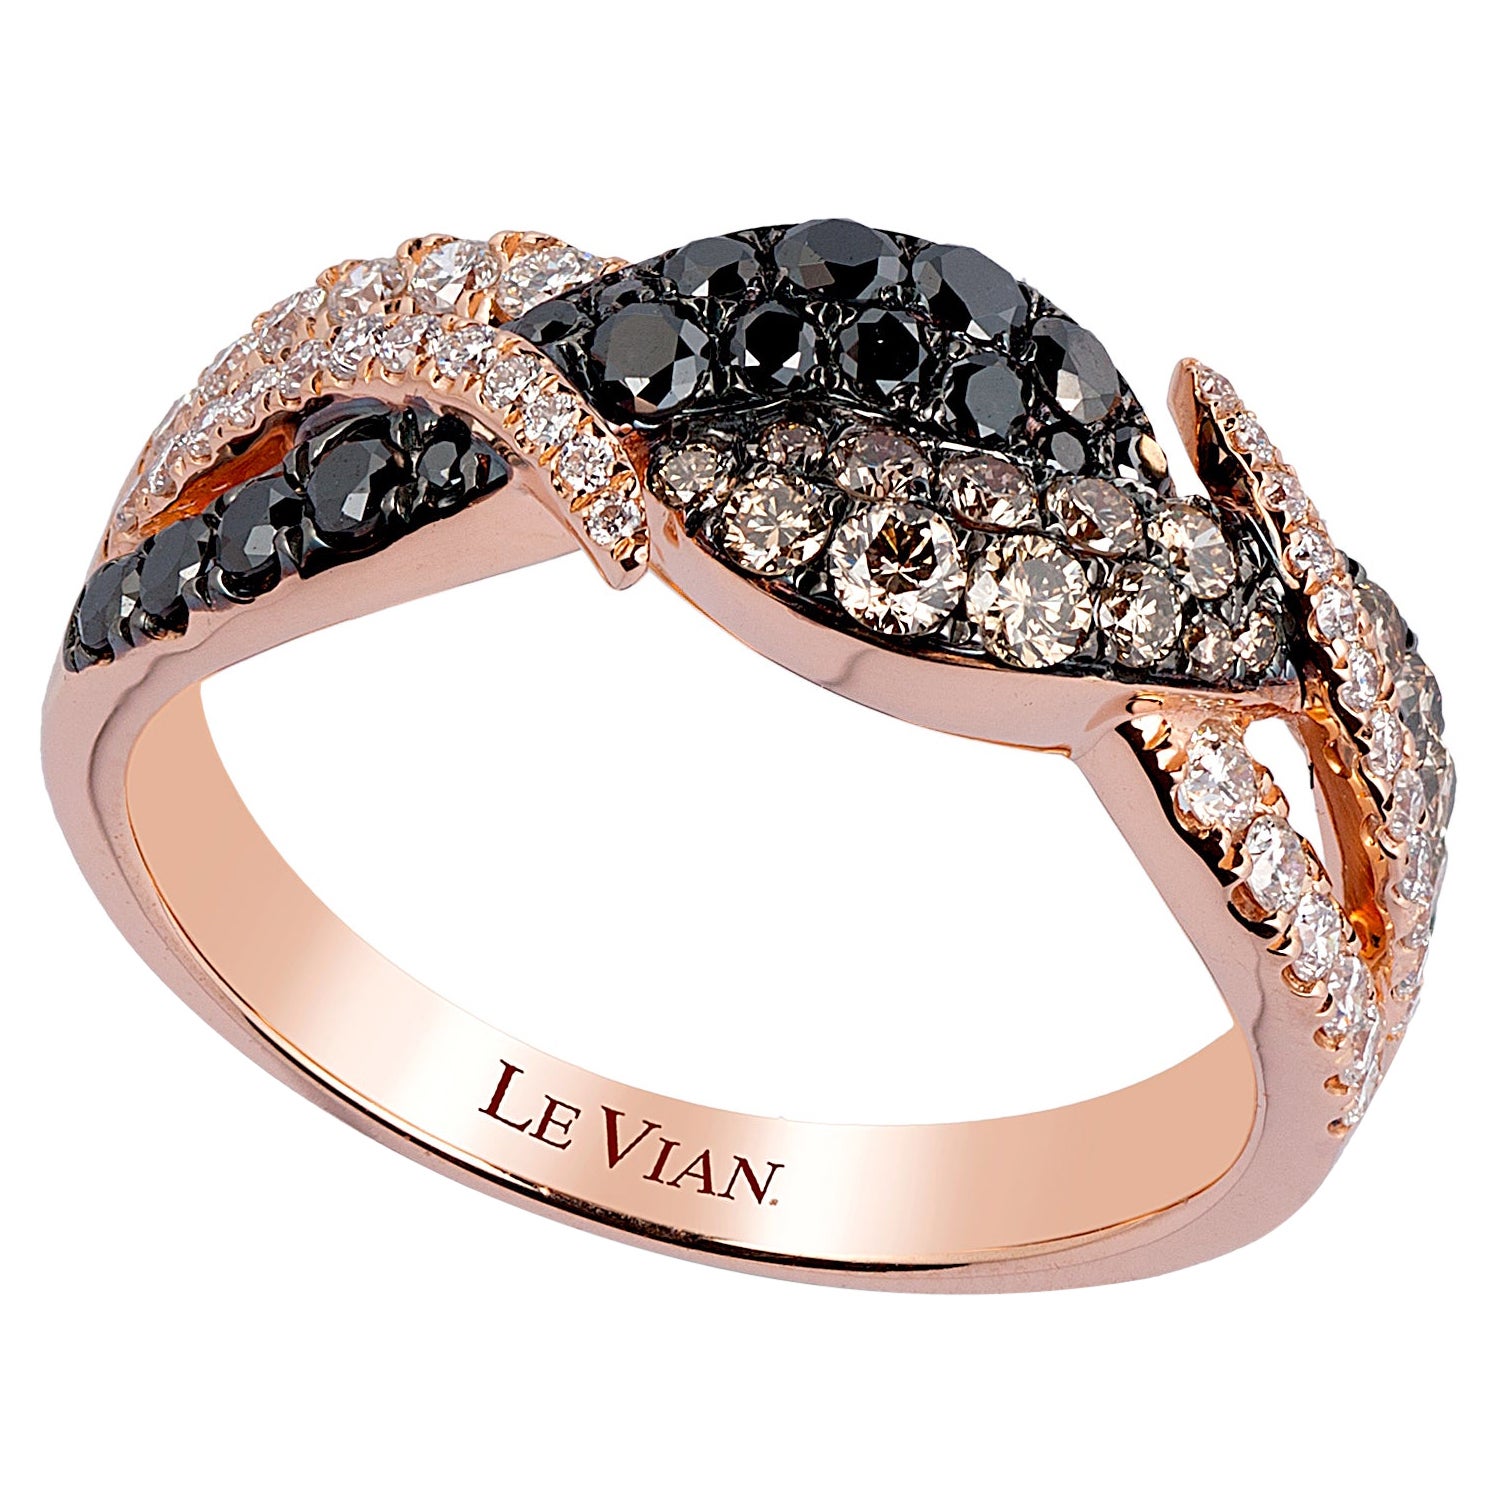 LeVian 14K Rose Gold Round Black Chocolate Brown Diamond Classy Cocktail Ring